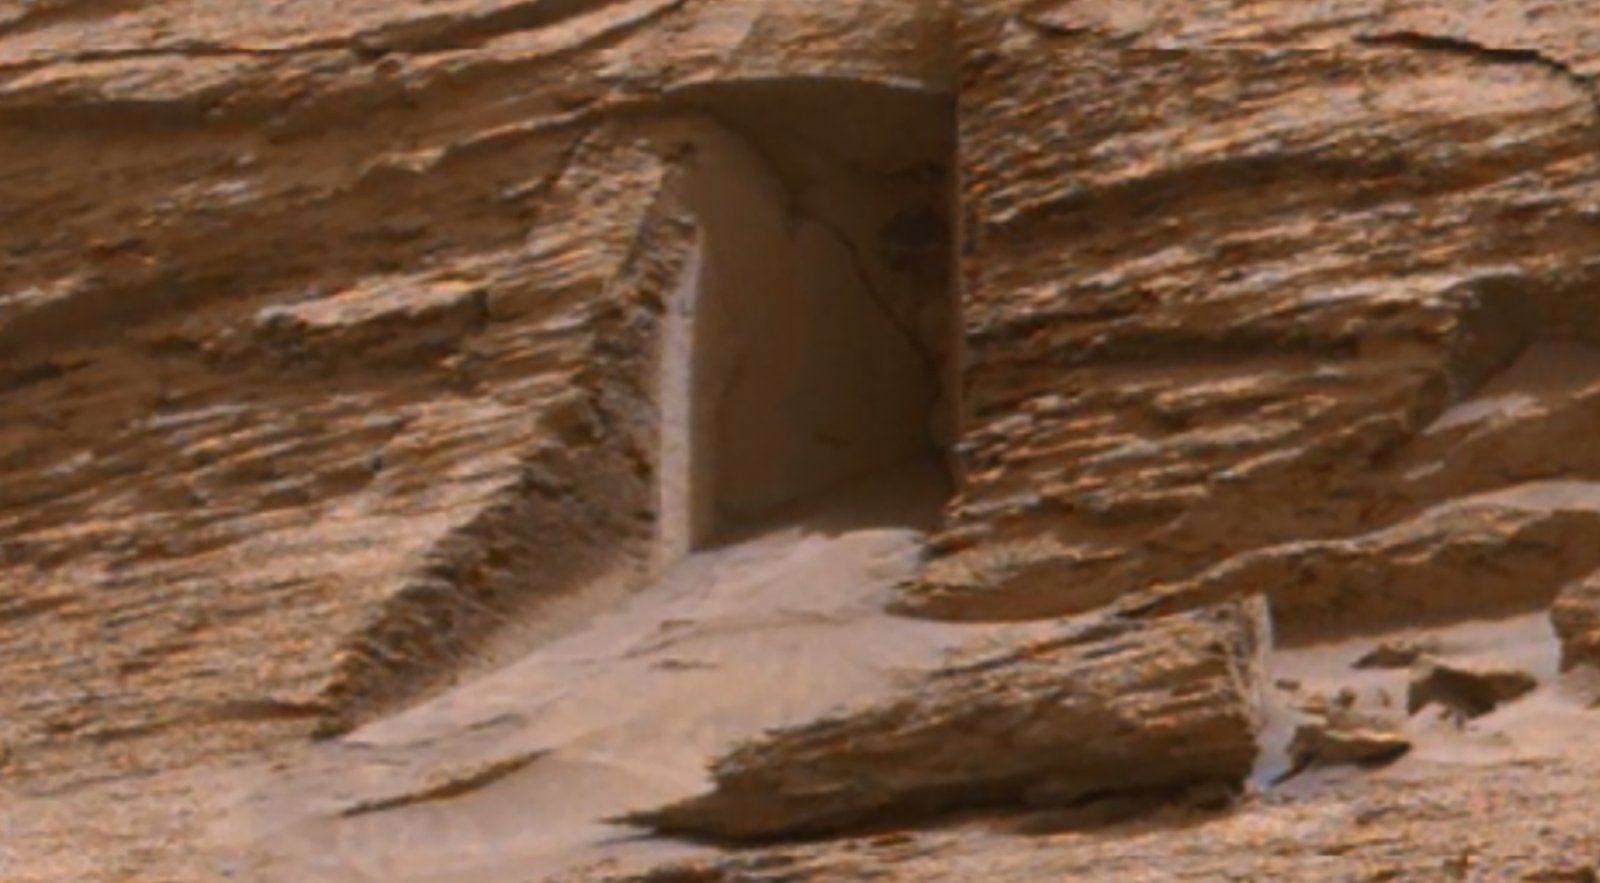 Mysterious doorway found on Mars isn’t an alien’s house, say killjoy geologists